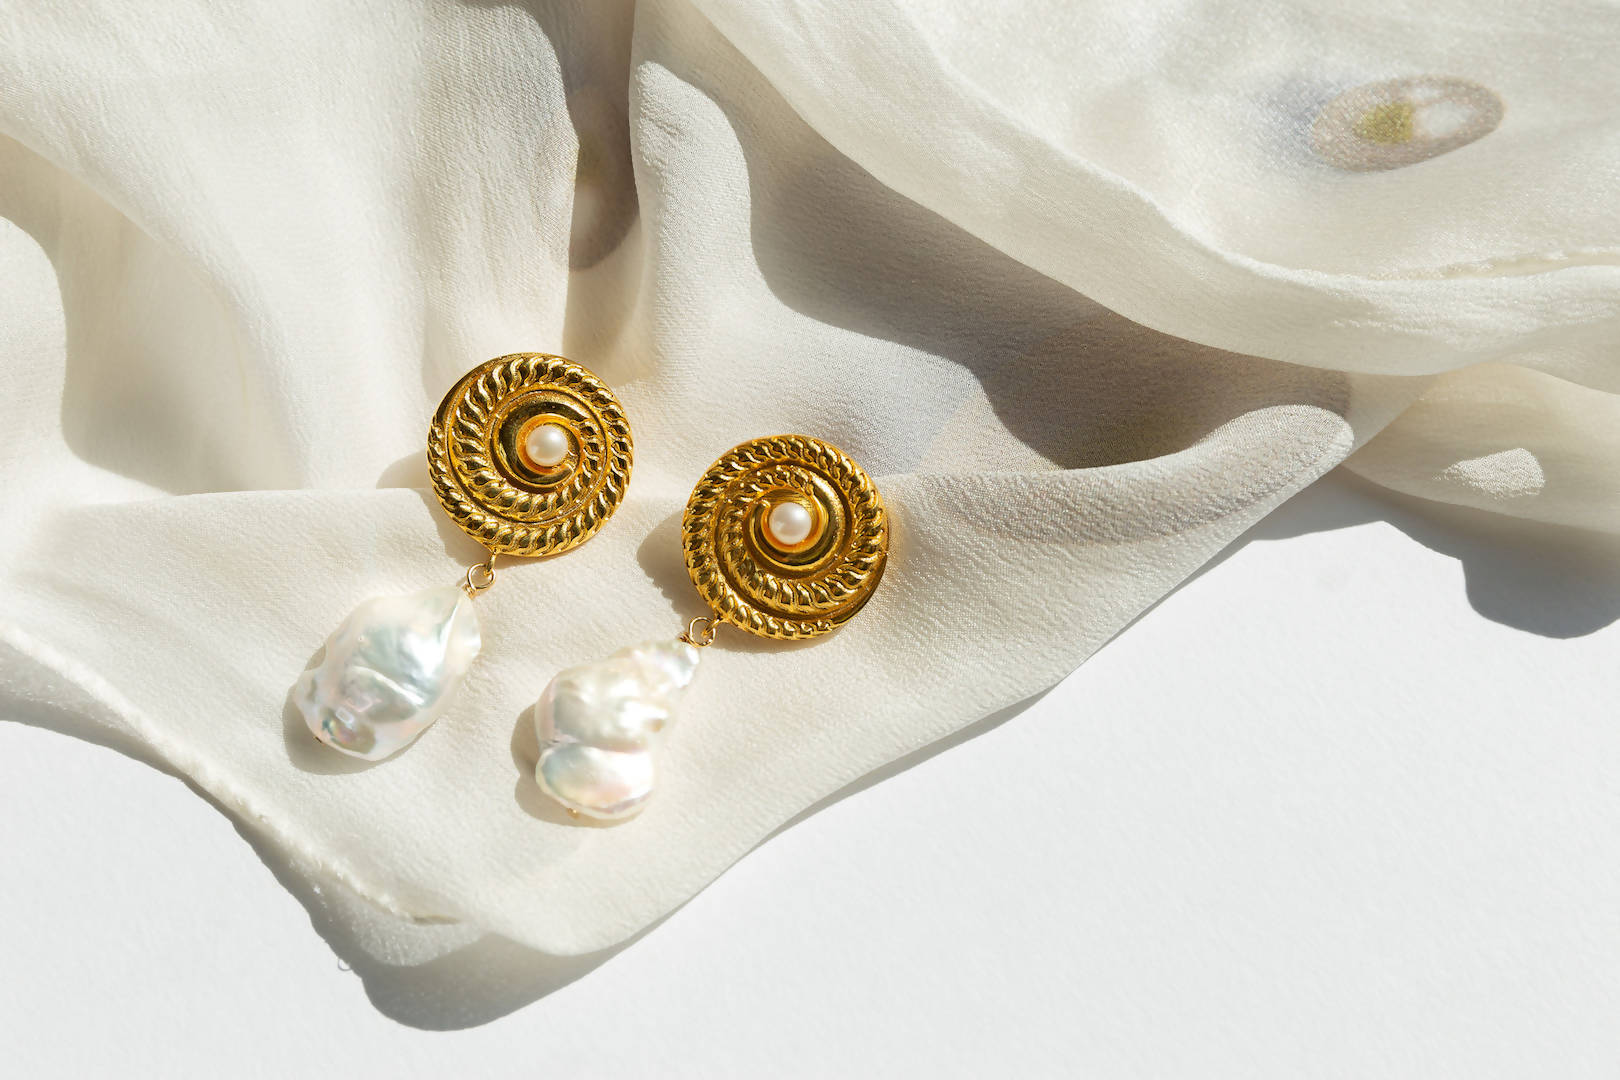 Baroque pearl earrings - Avanguardian Gallery London